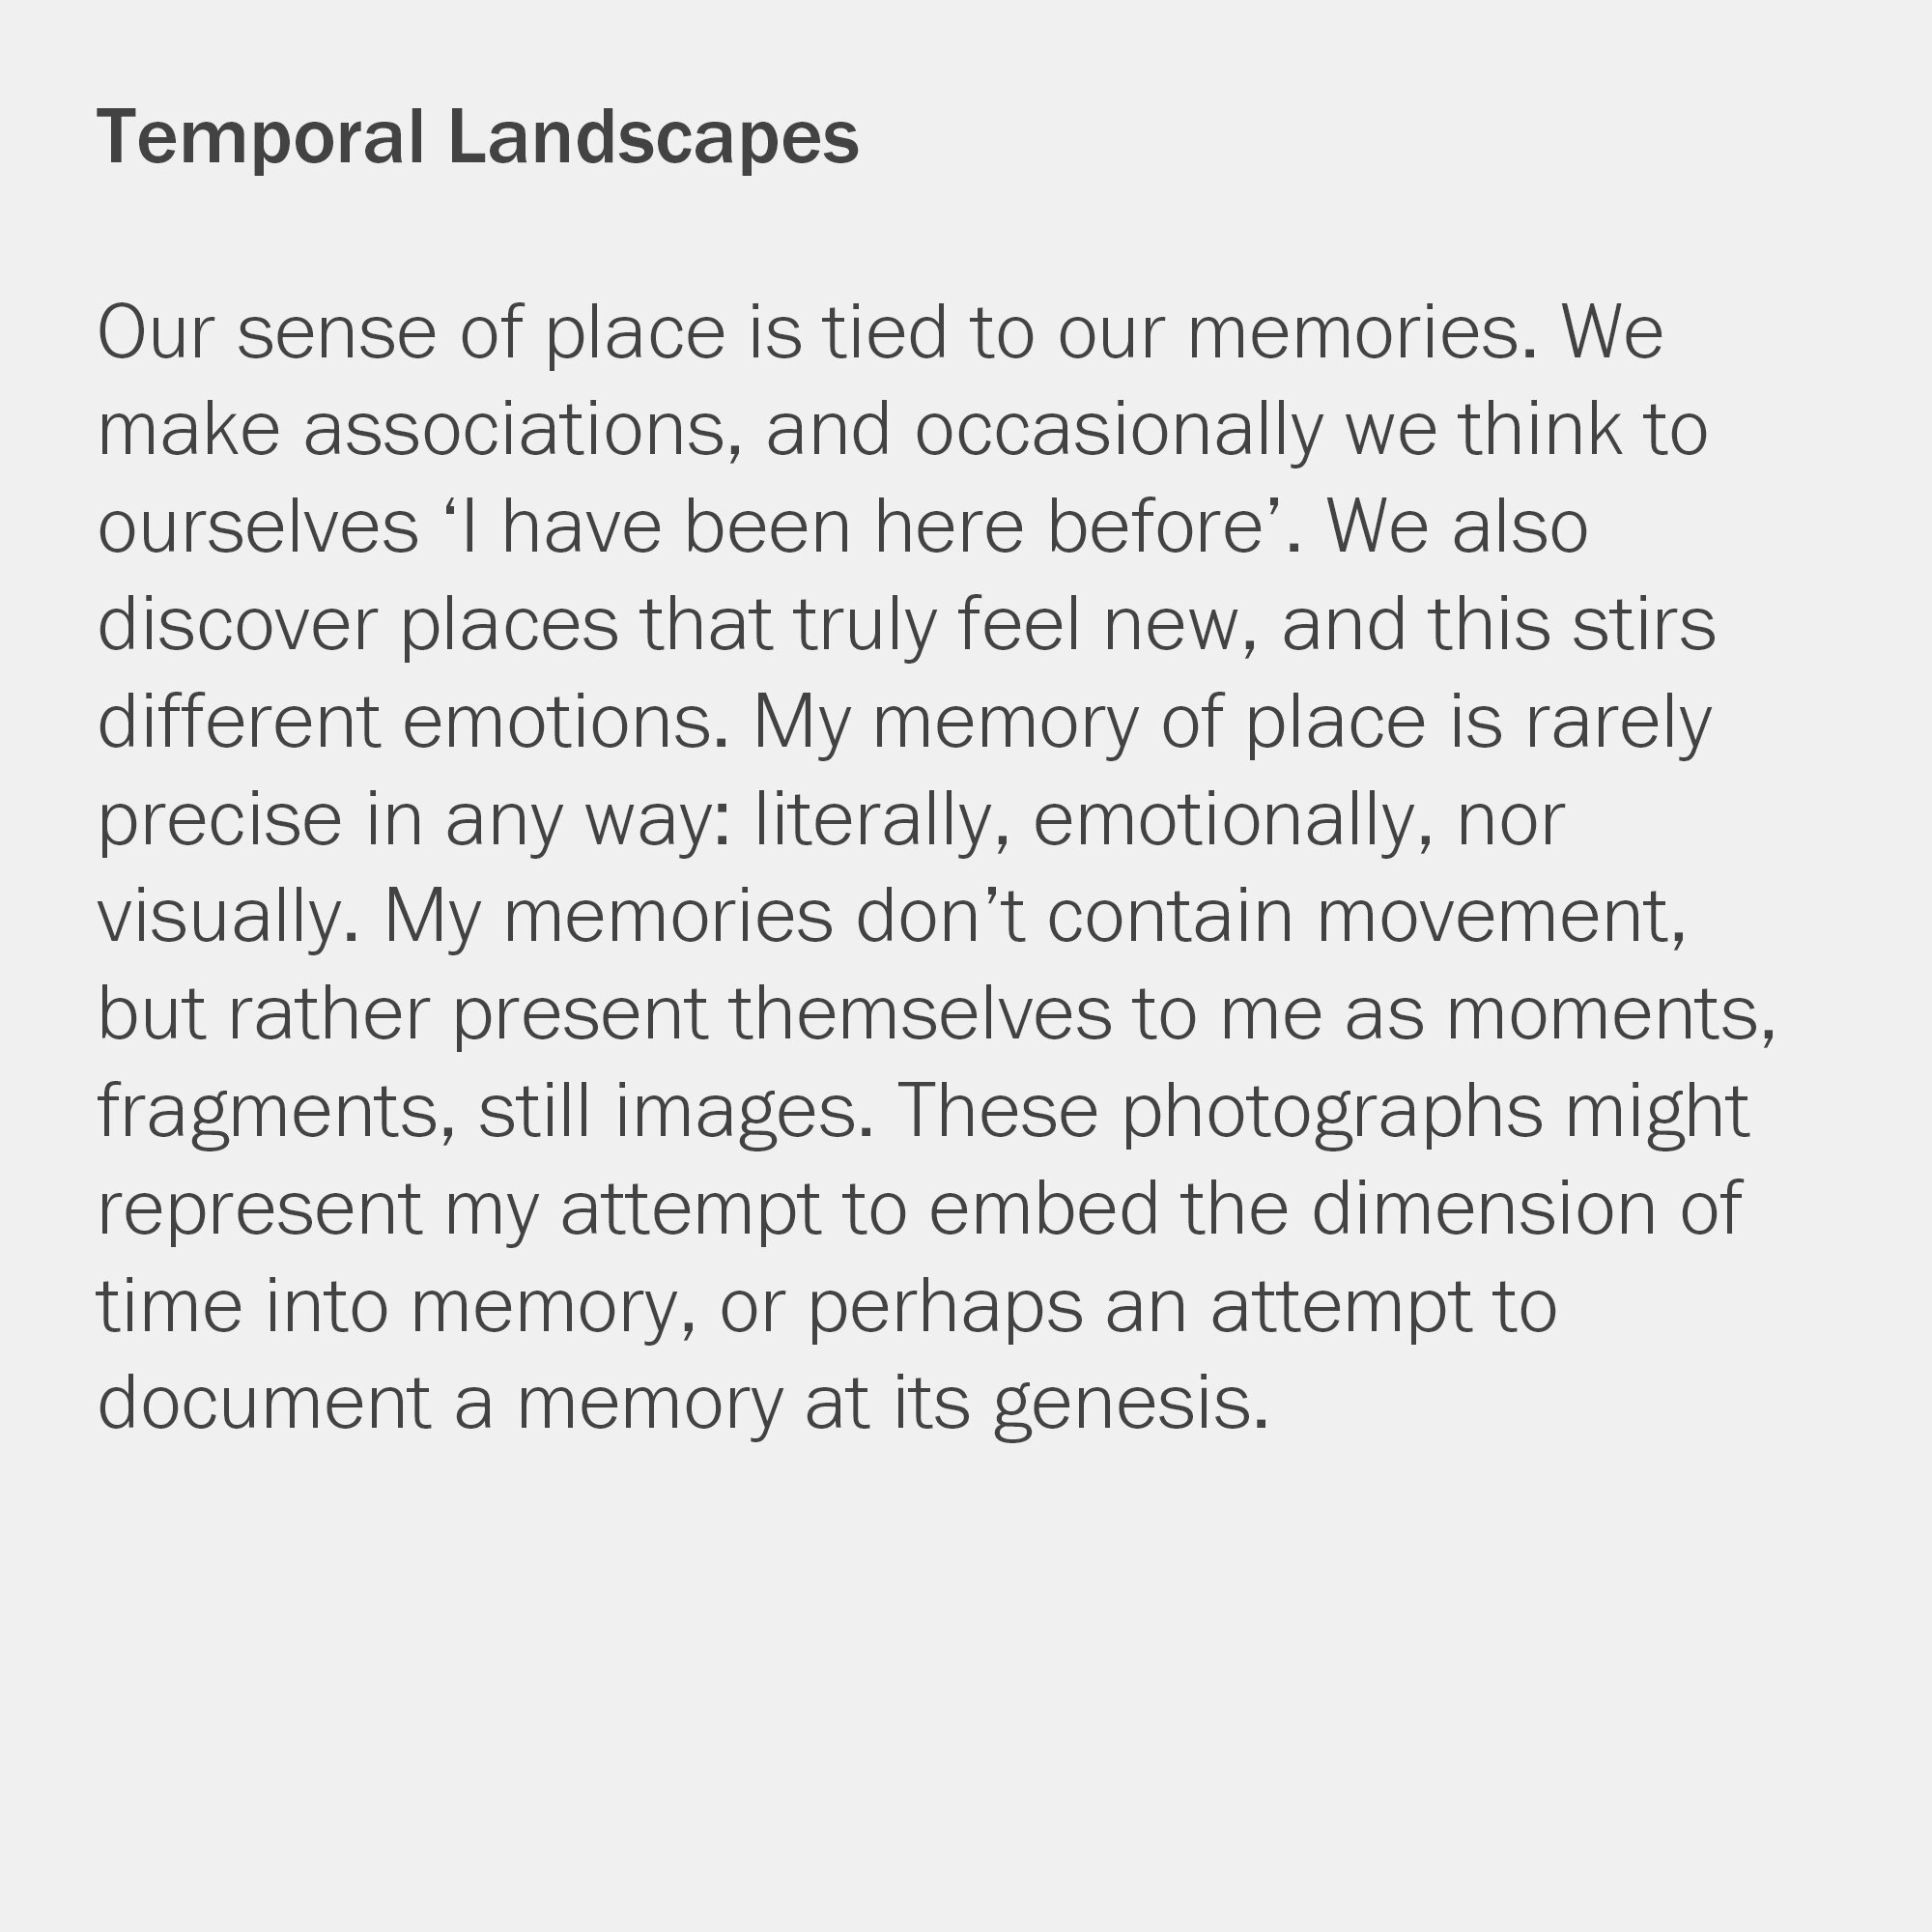 text-square-temporal landscapes copy.jpg